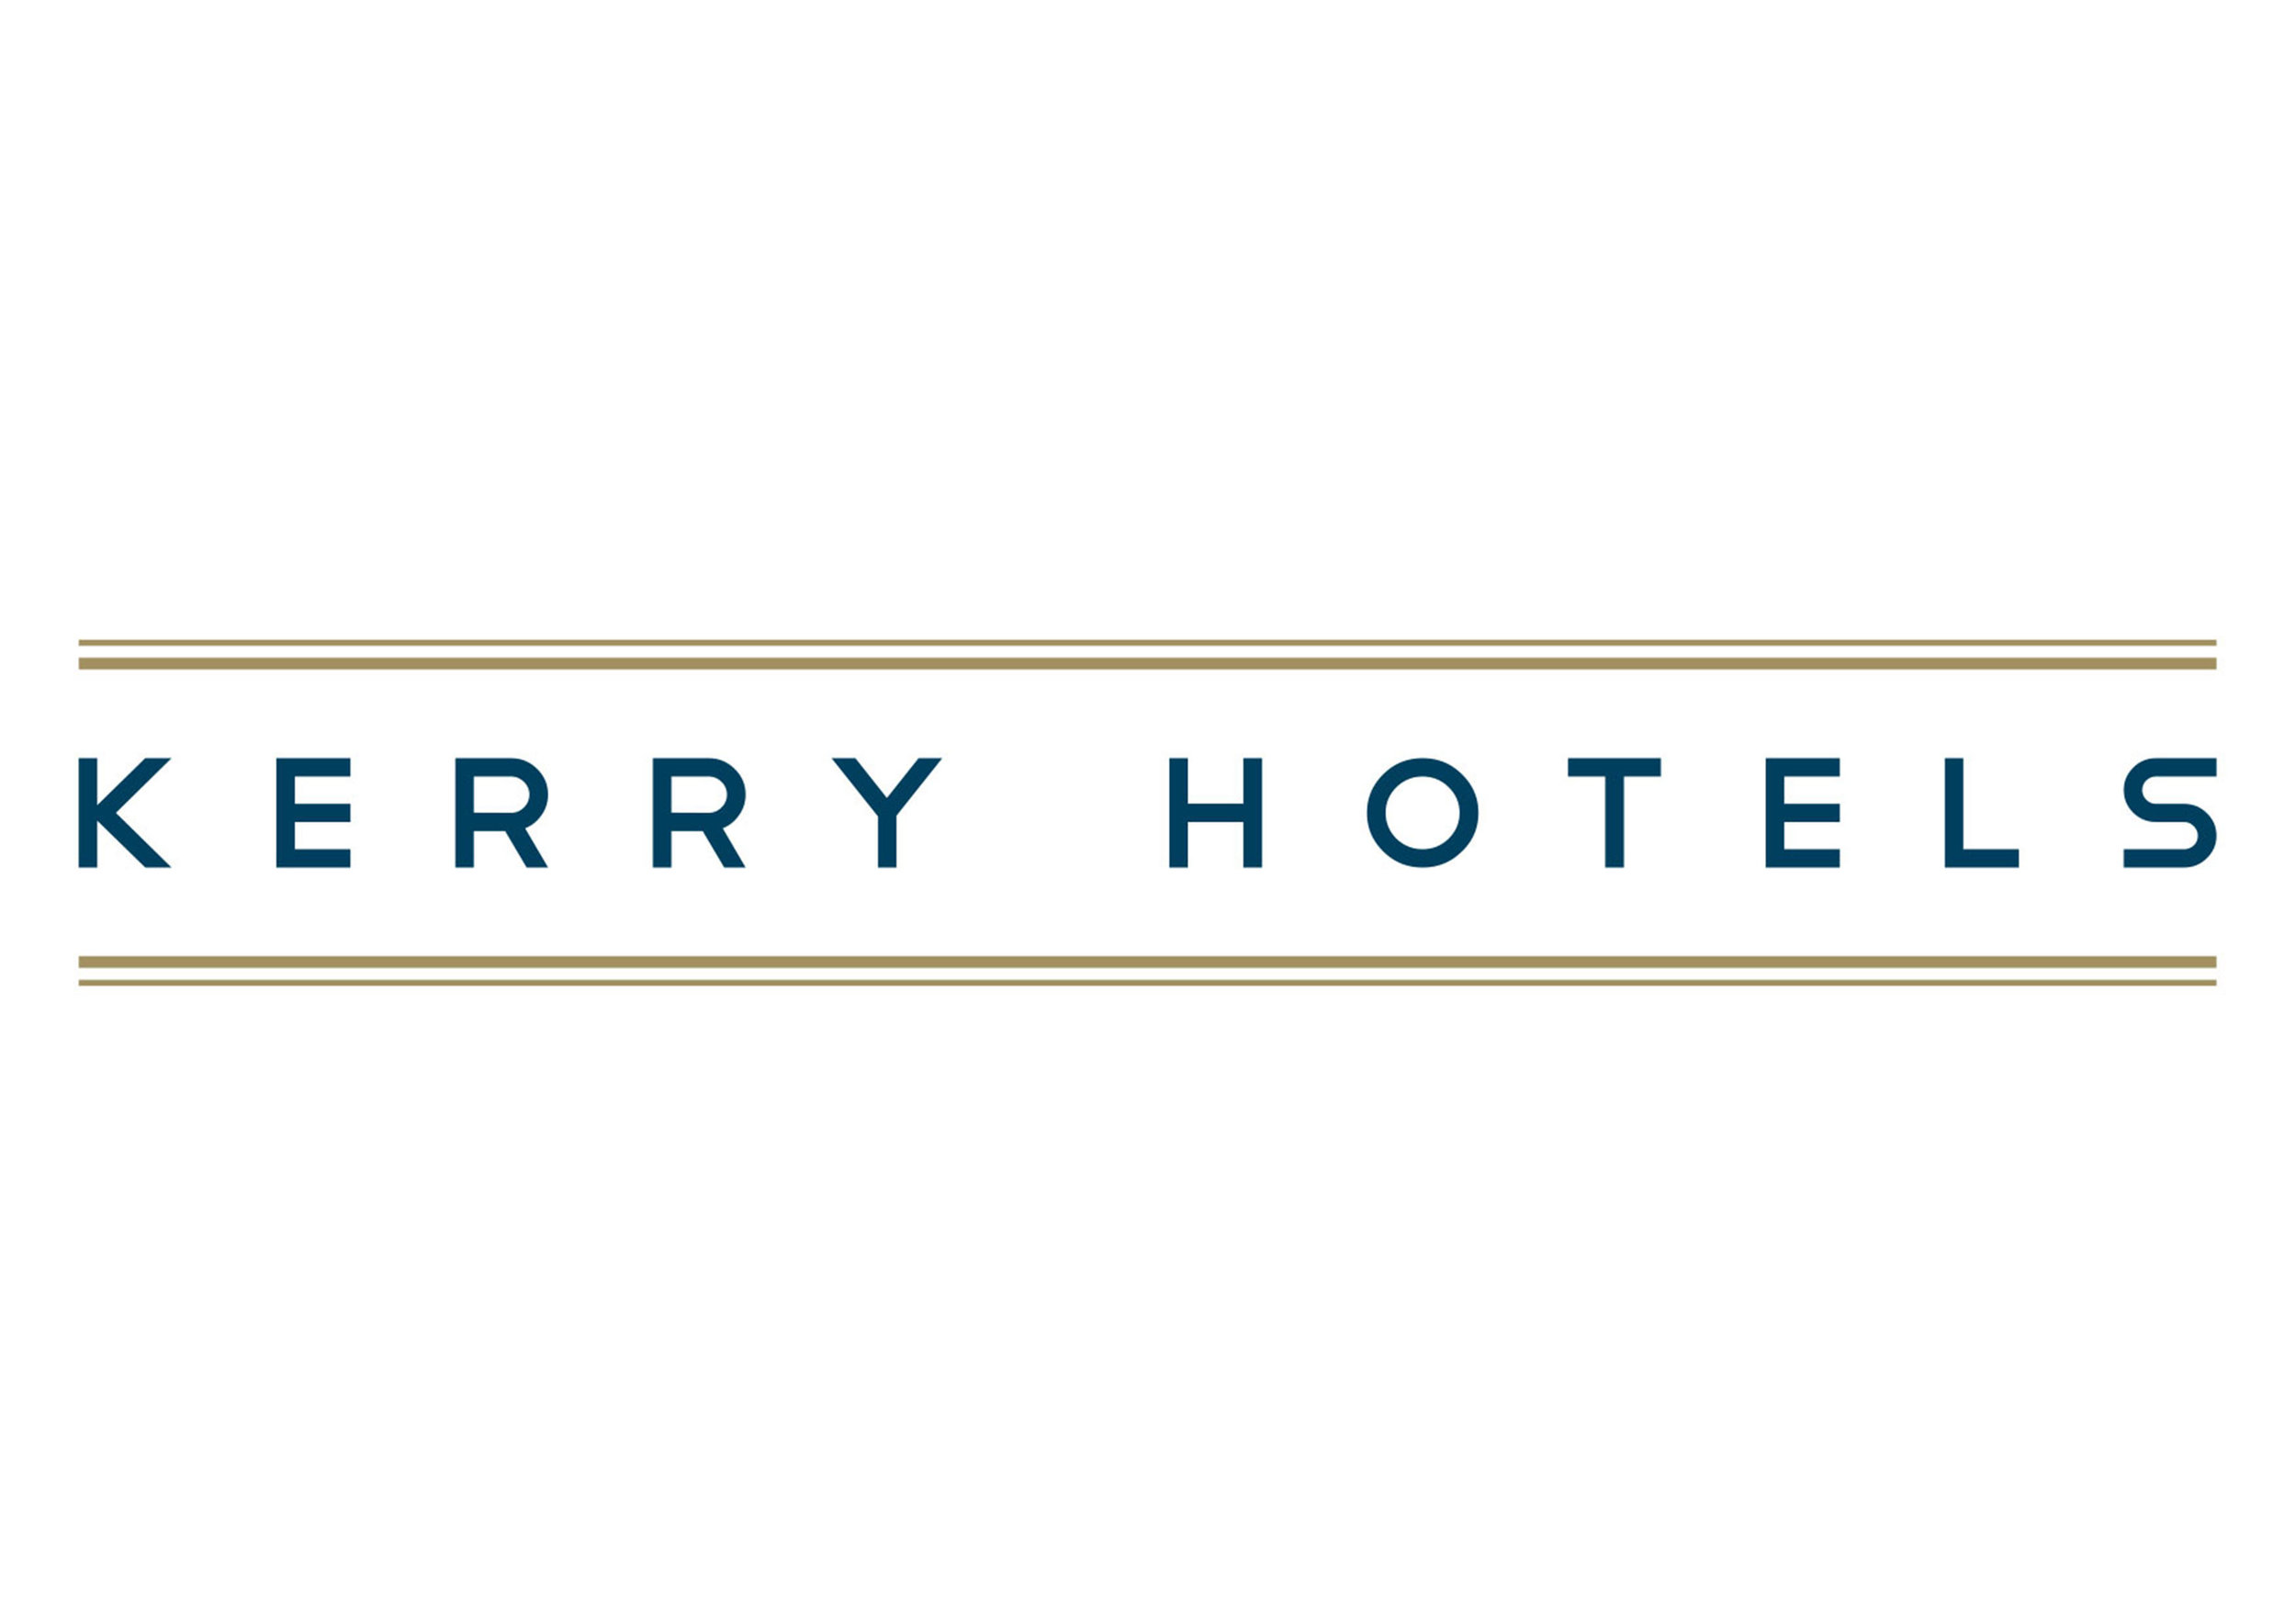  ..  Kerry Hotels 